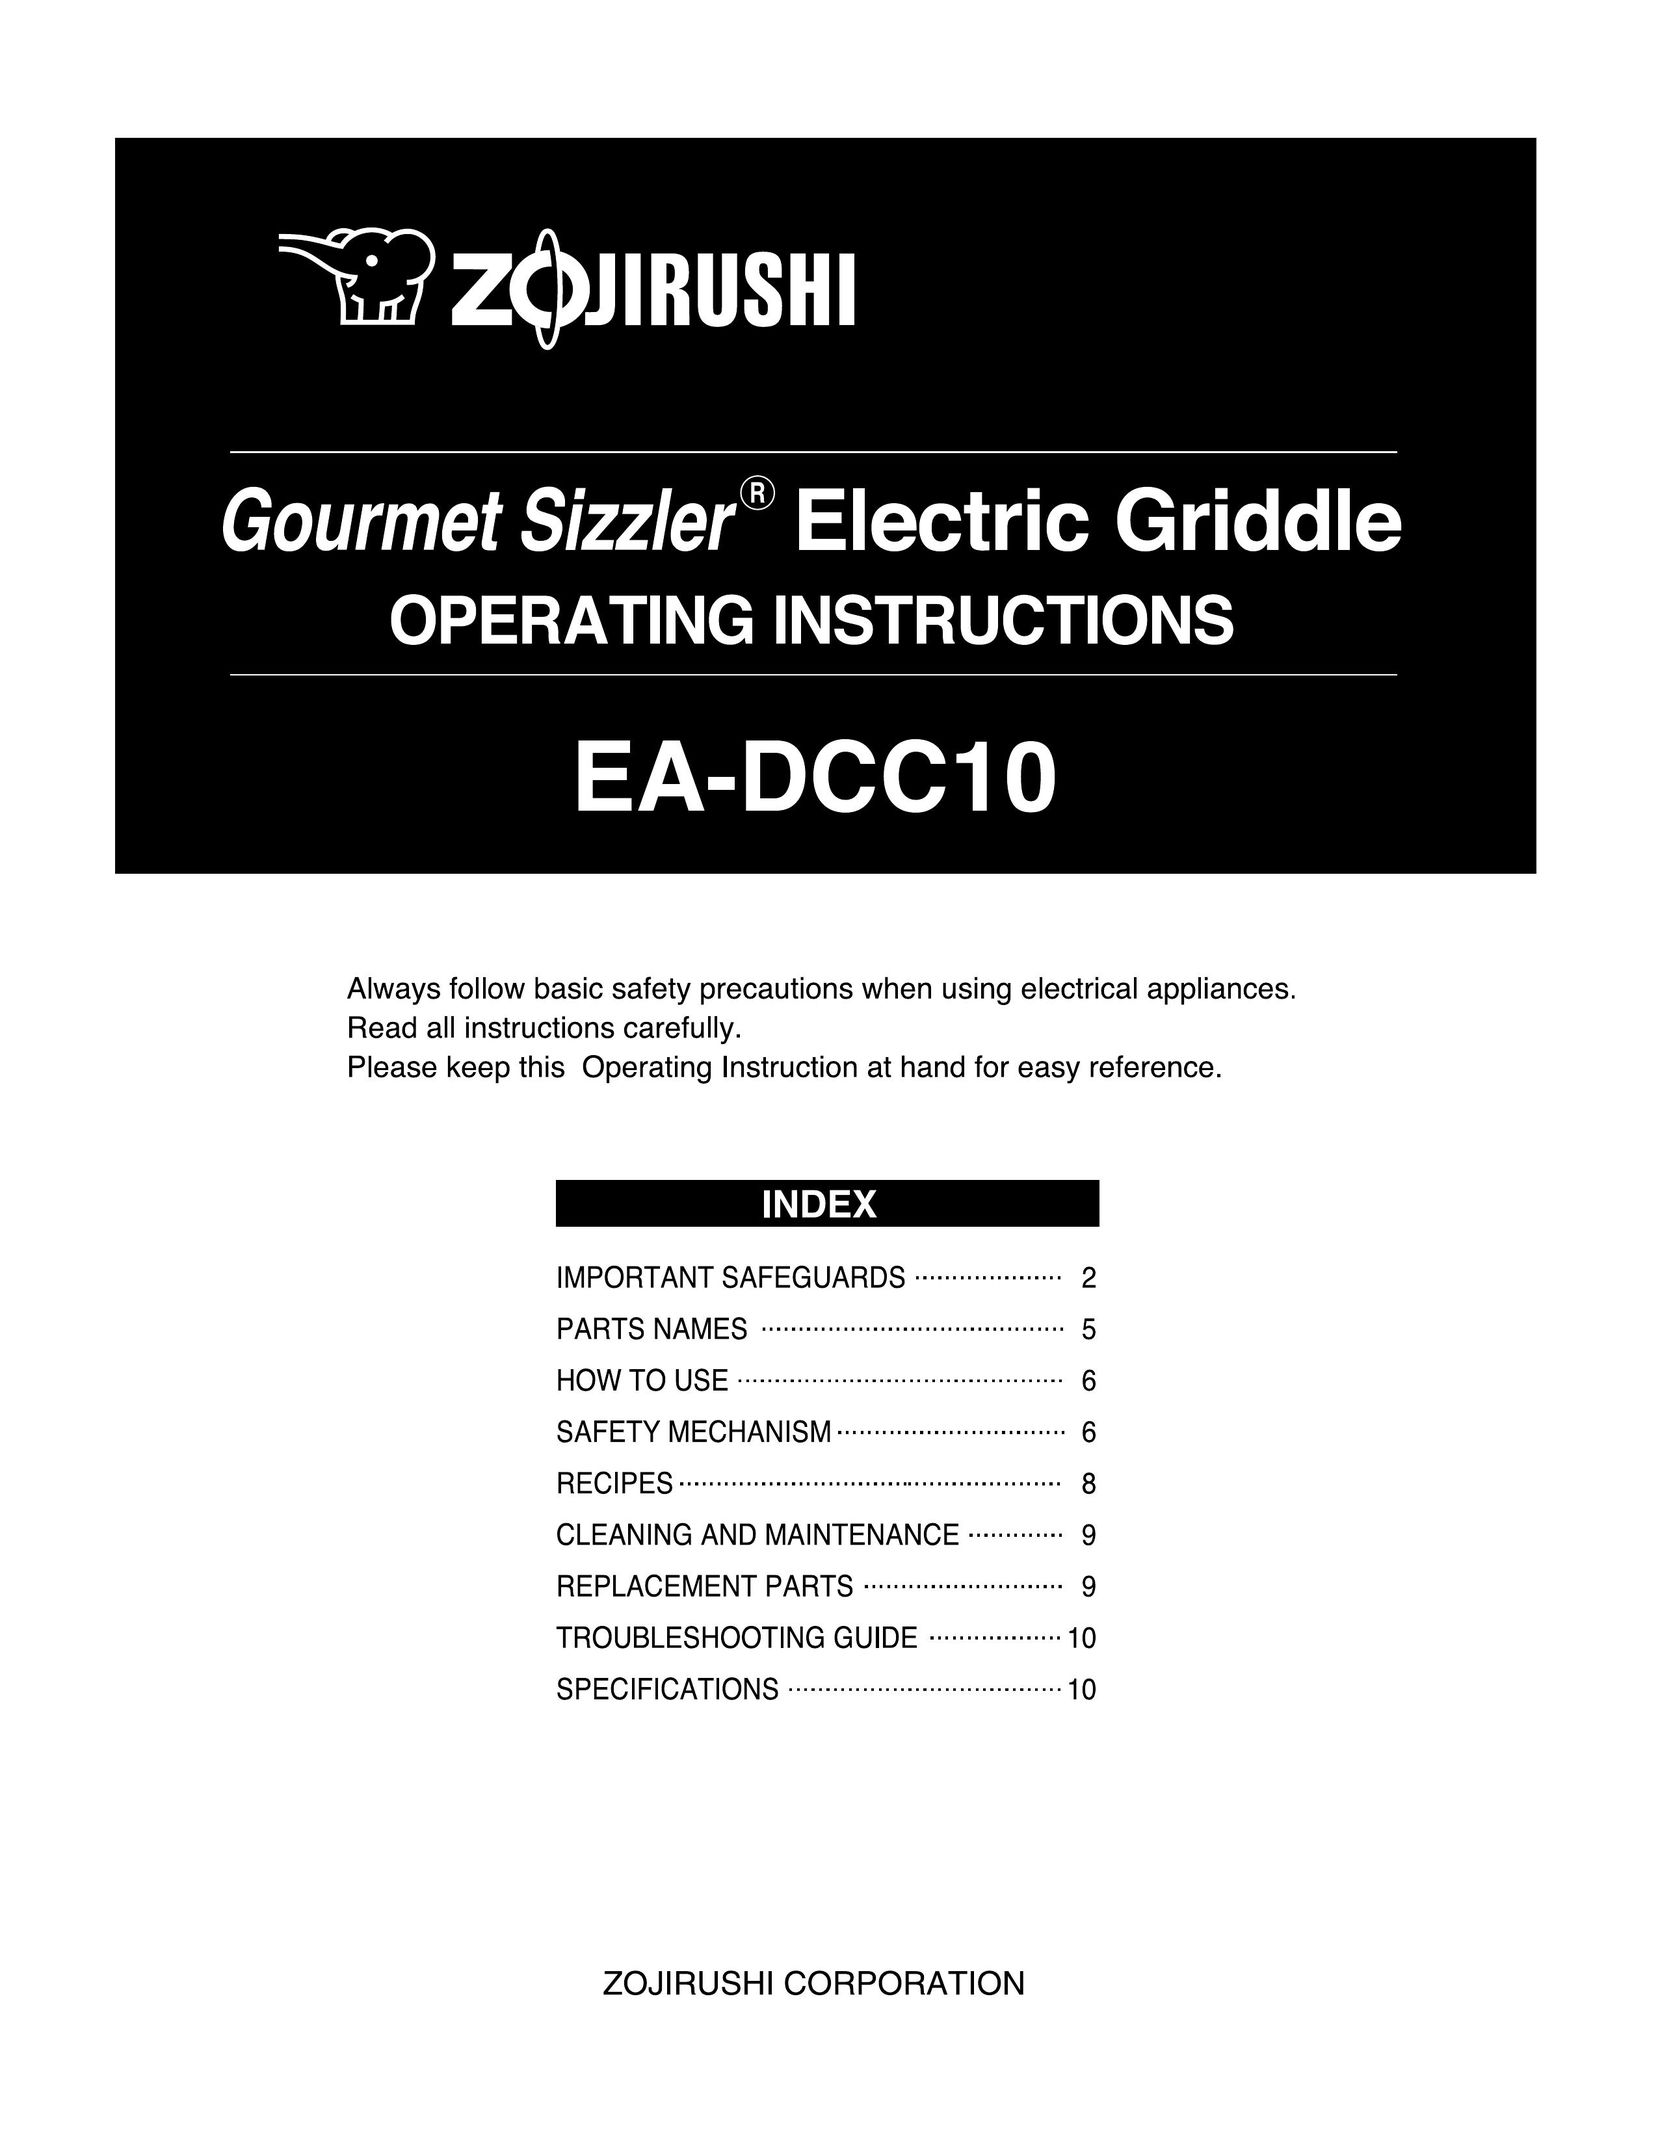 Zojirushi EA-DCC10 Cooktop User Manual